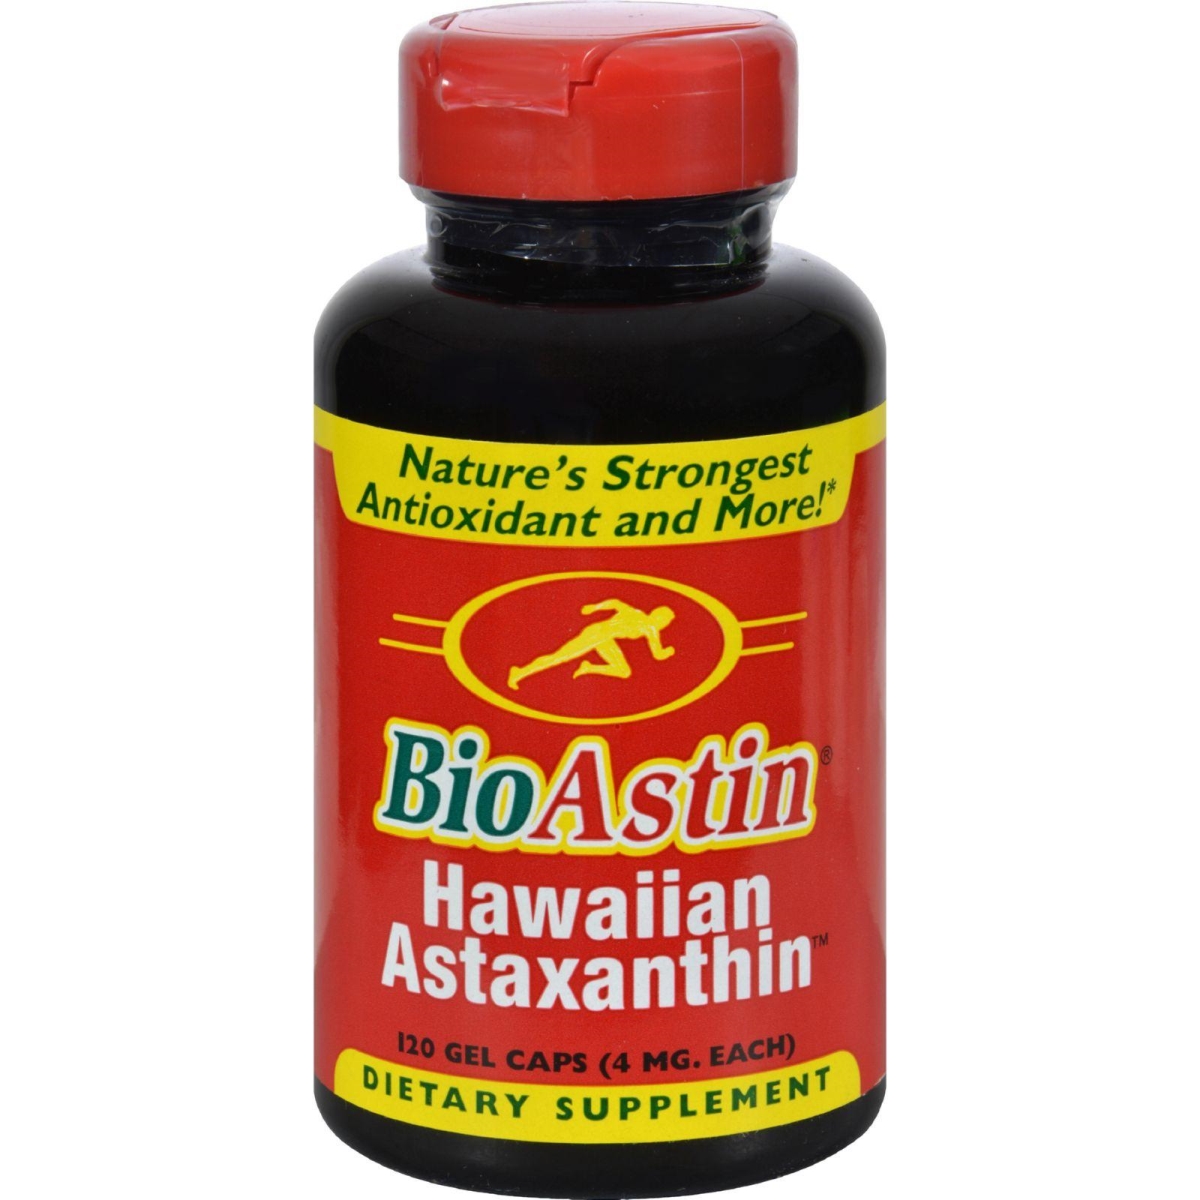 Hg0396770 Bioastin Natural Astaxanthin - 120 Gelatin Capsules